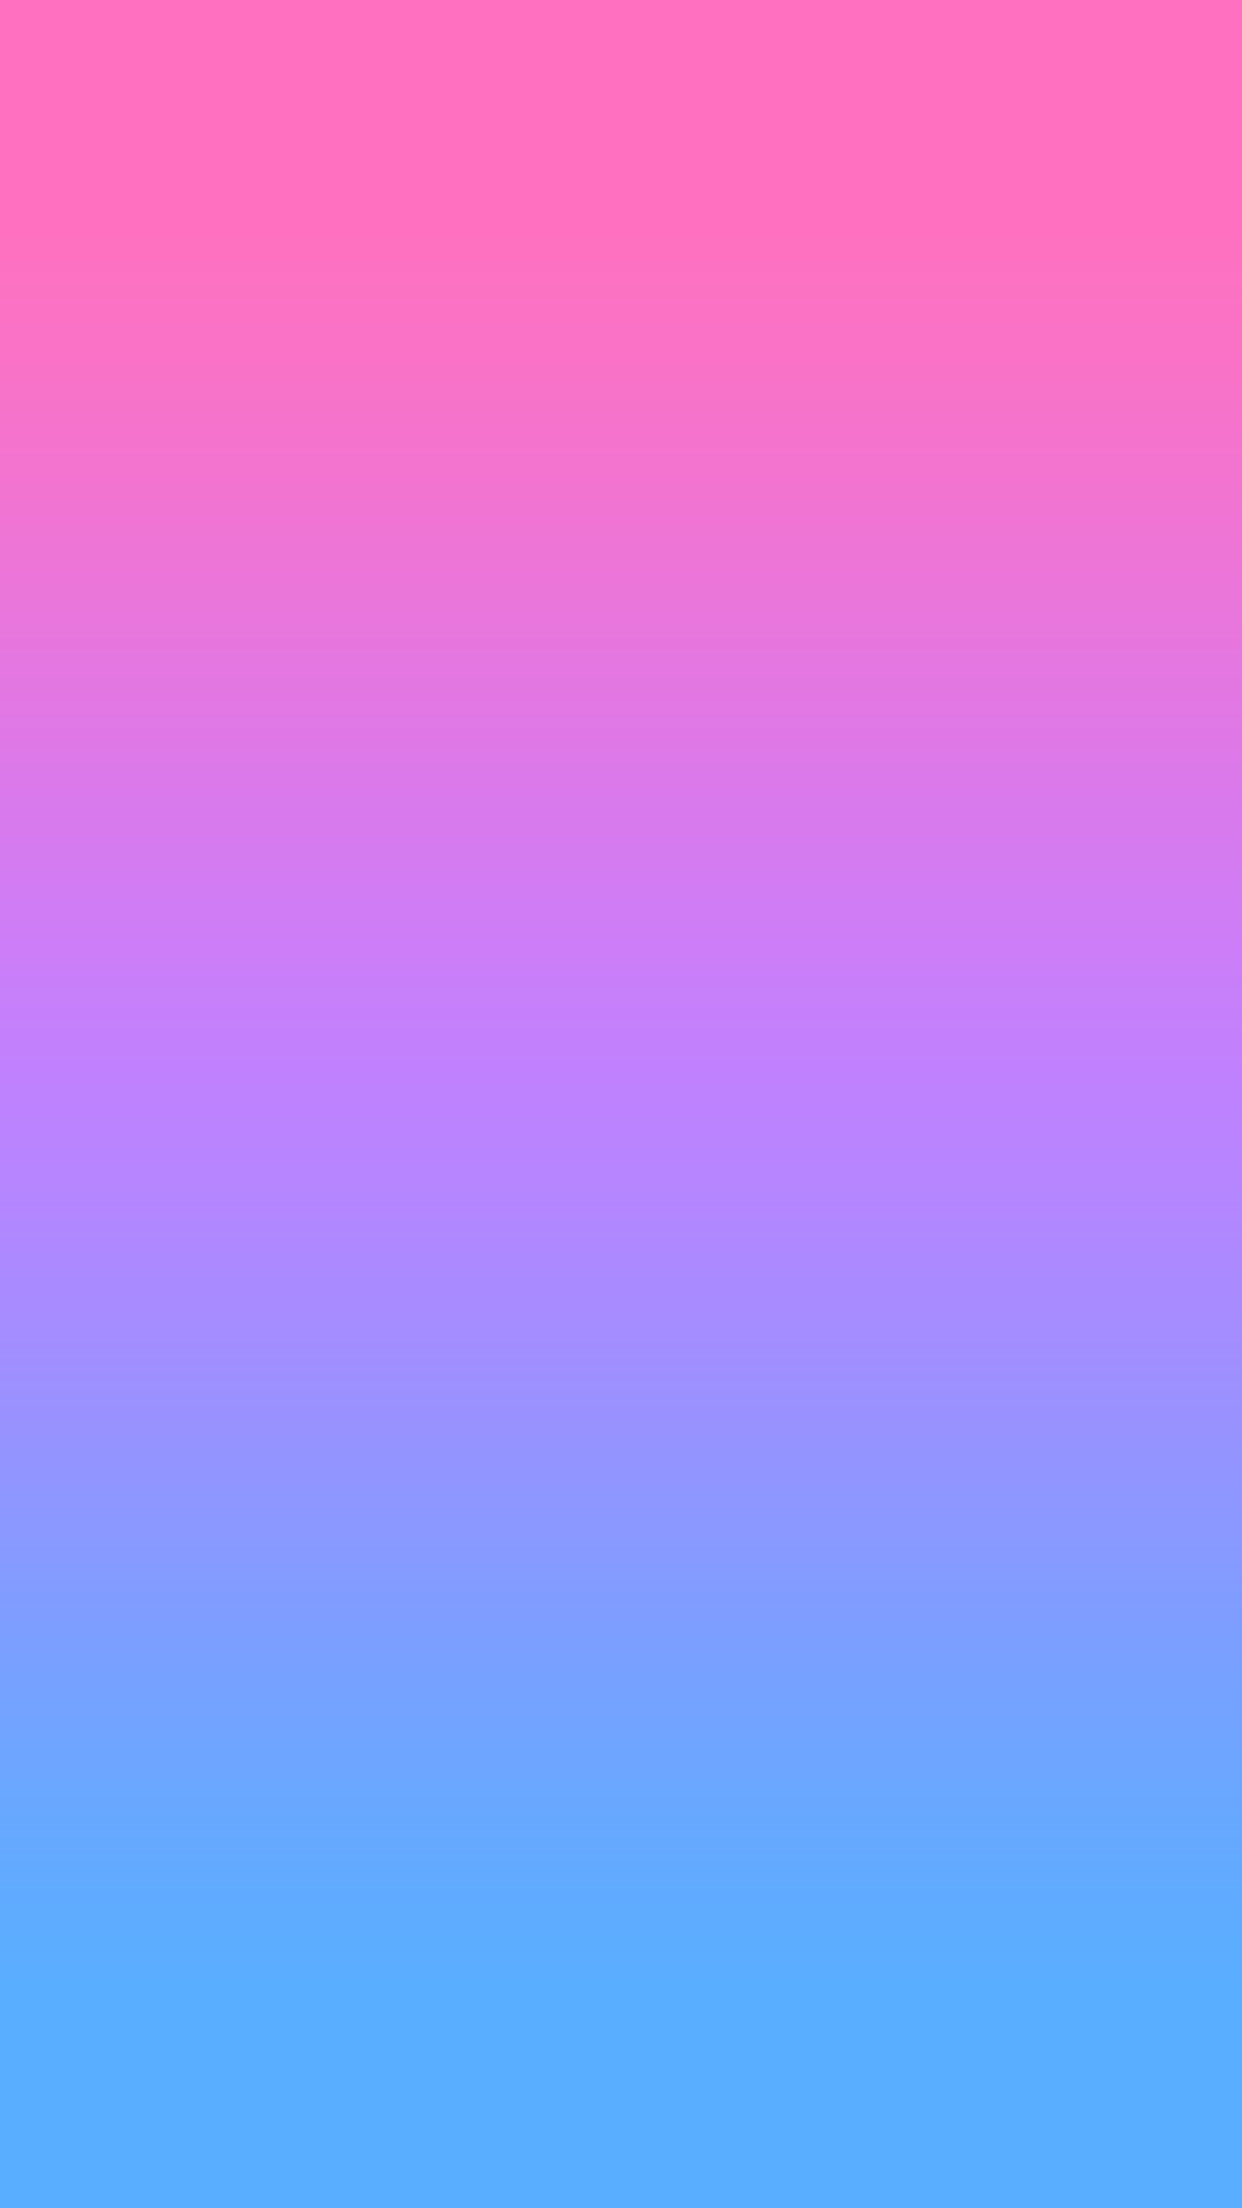 Pink Purple Blue Violet Gradient Ombre Wallpaper Background. Download